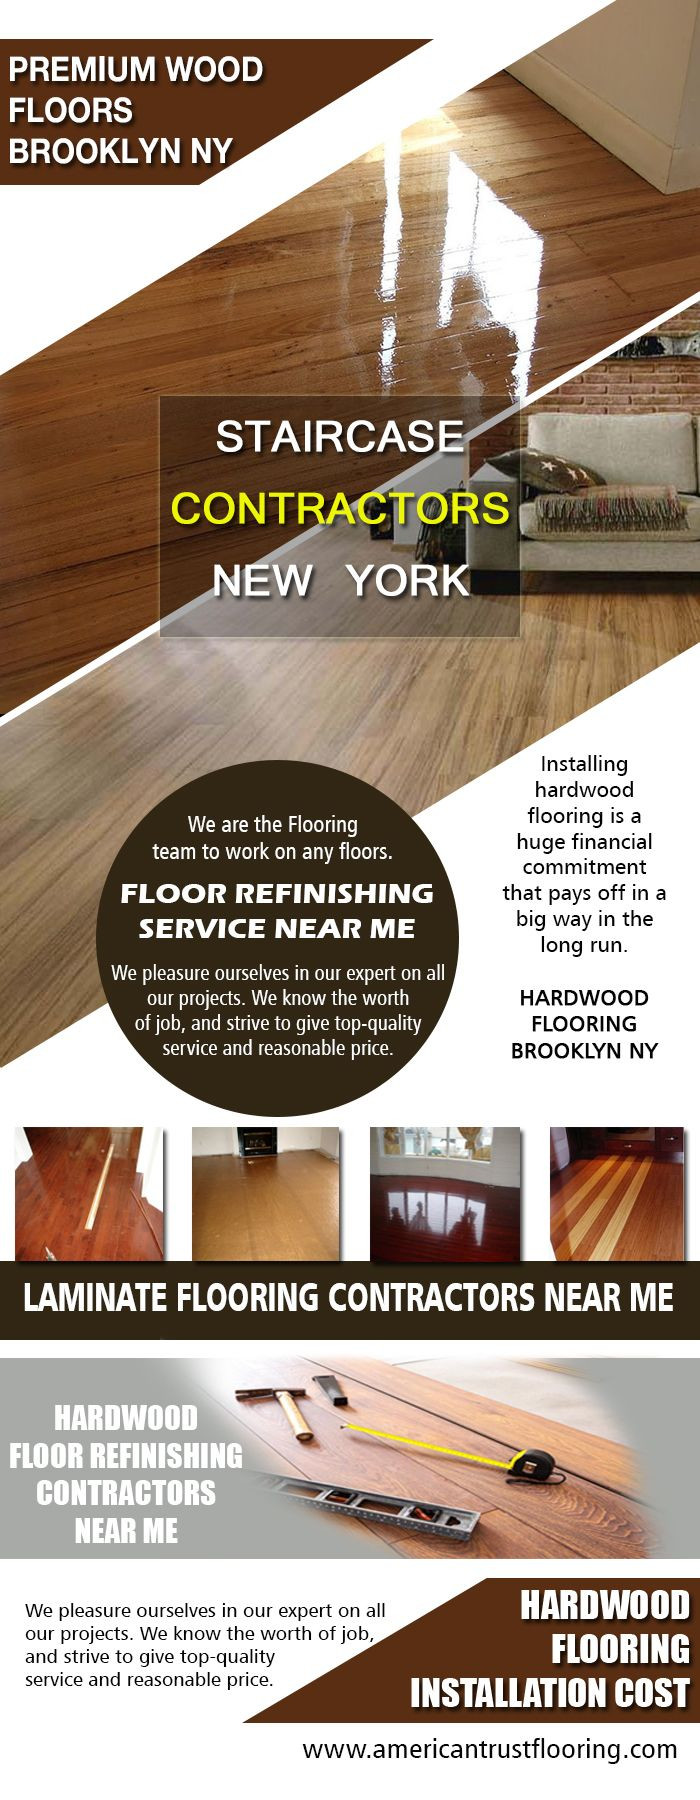 28 Fashionable Hardwood Floor Refinishing Companies Near Me | Unique Flooring Ideas